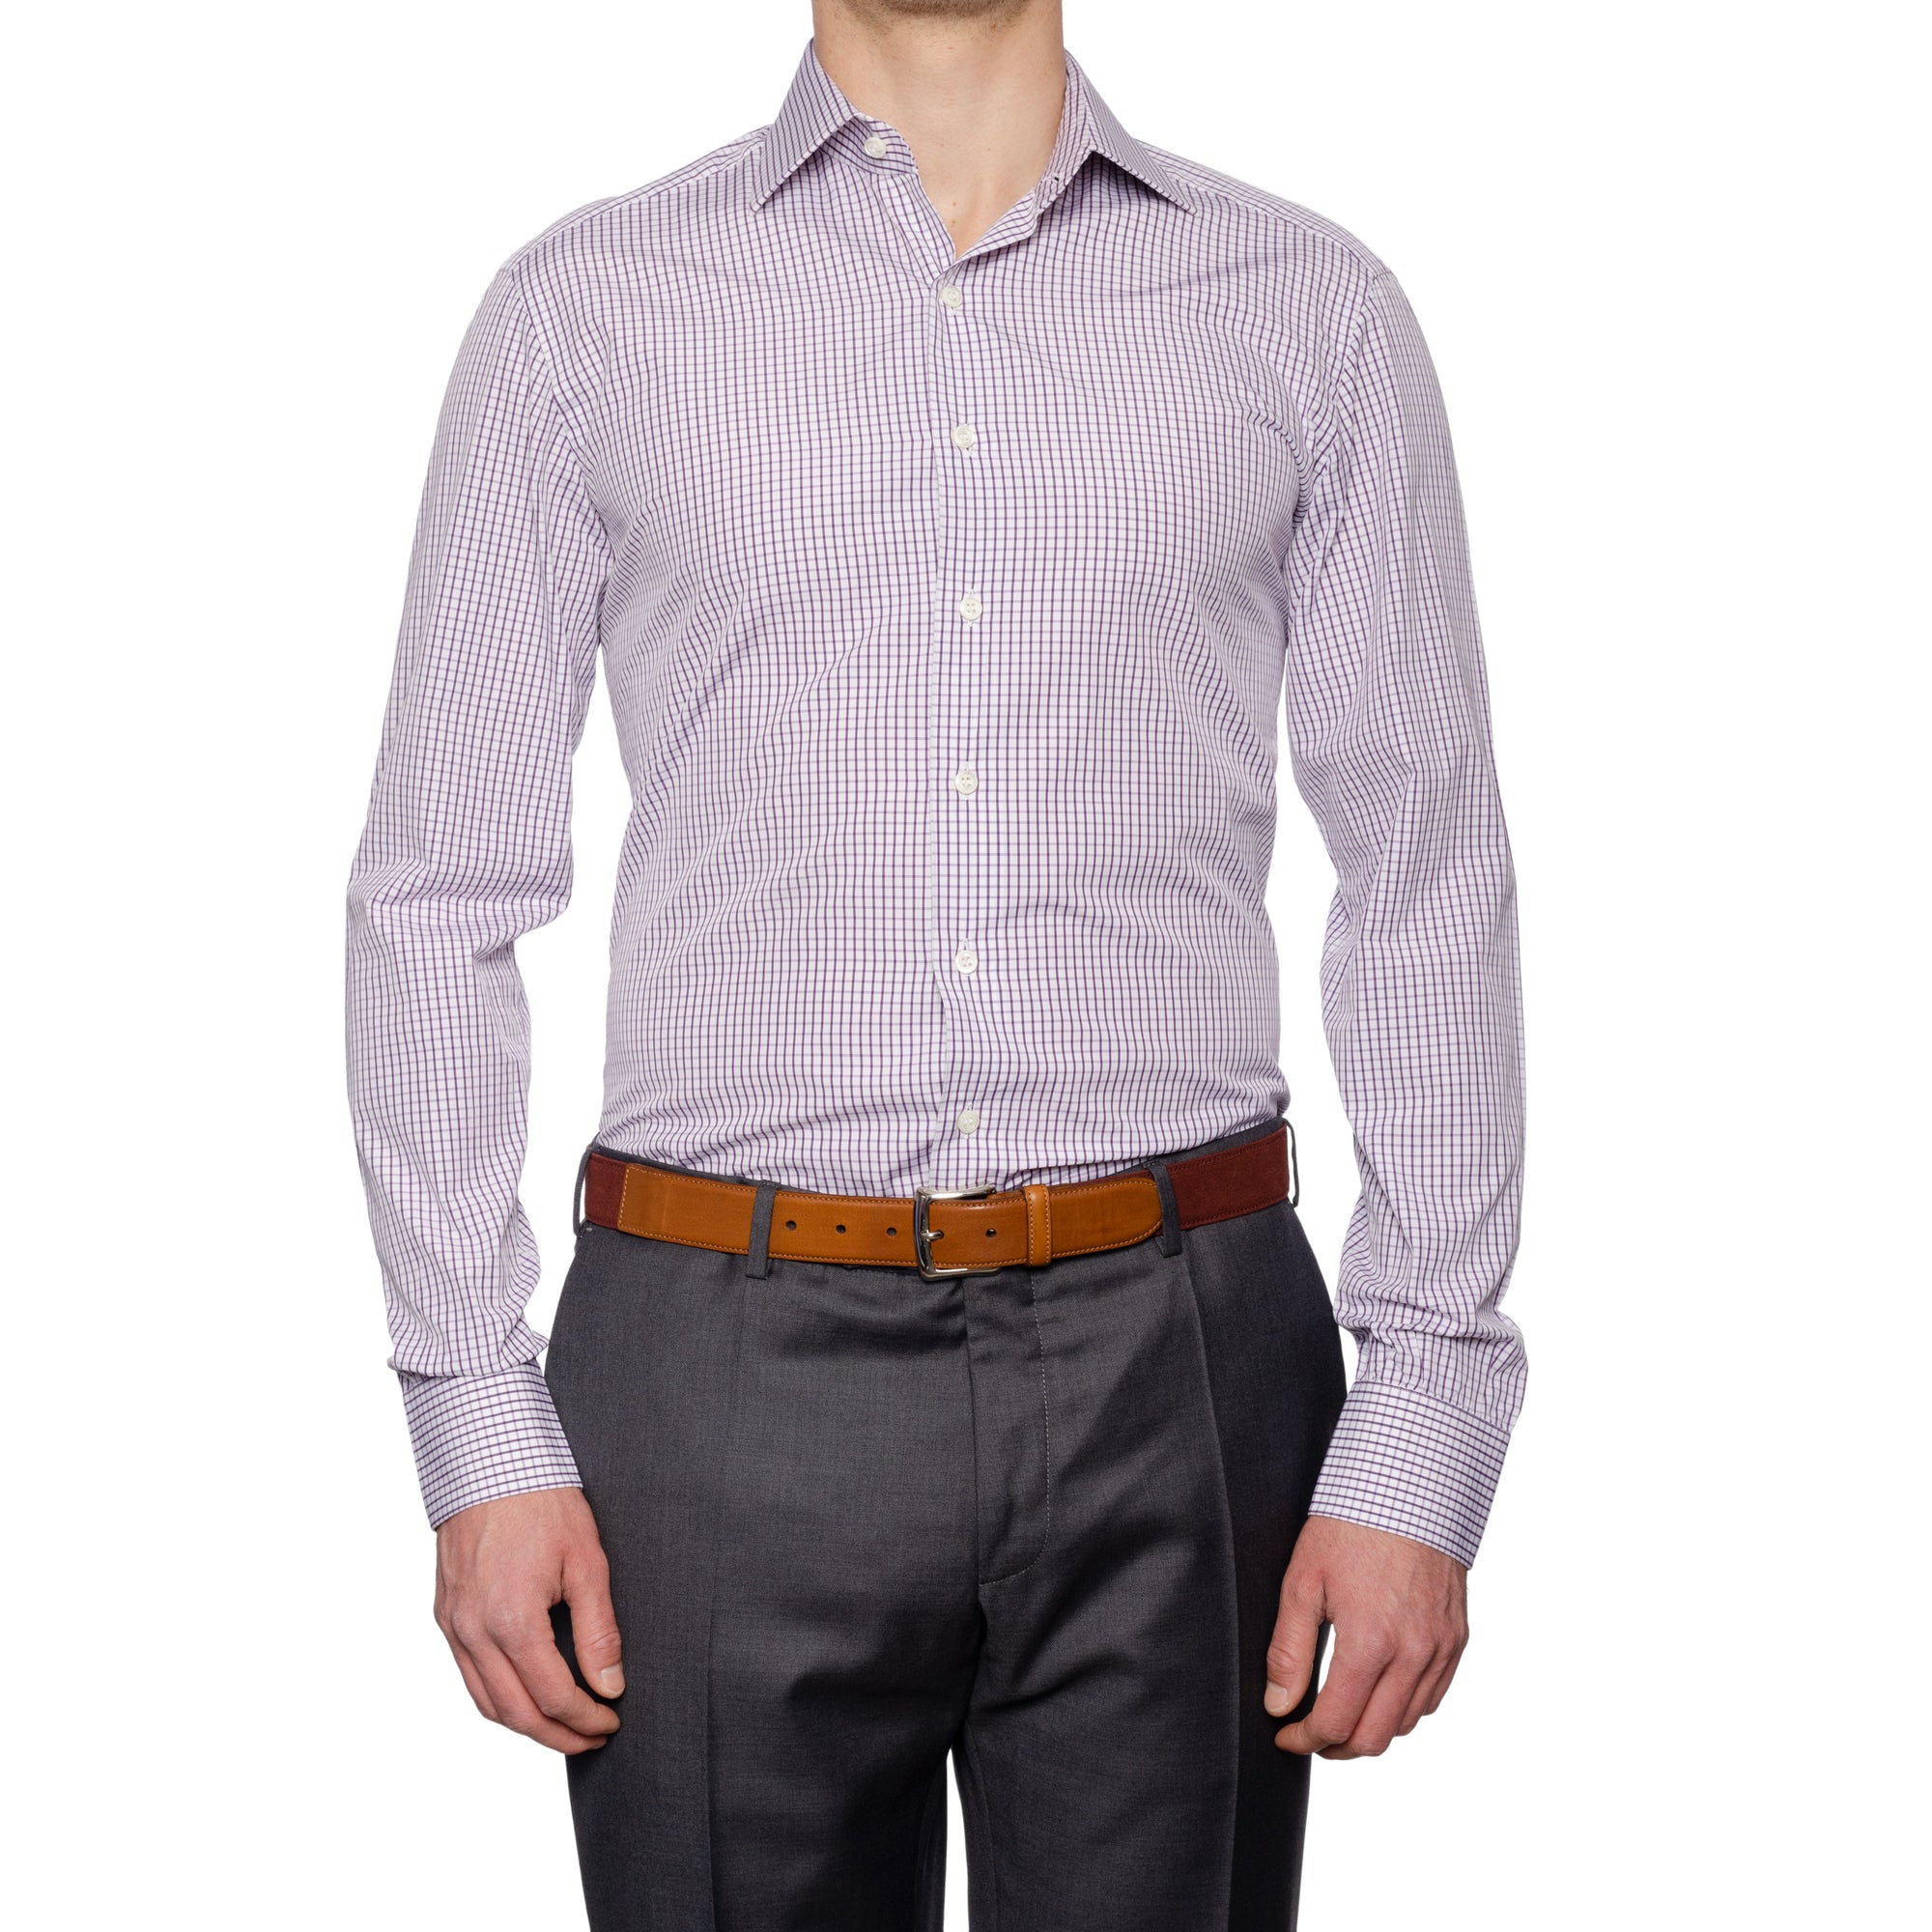 BESPOKE ATHENS Handmade Purple Plaid Cotton Dress Shirt EU 41 NEW US 1